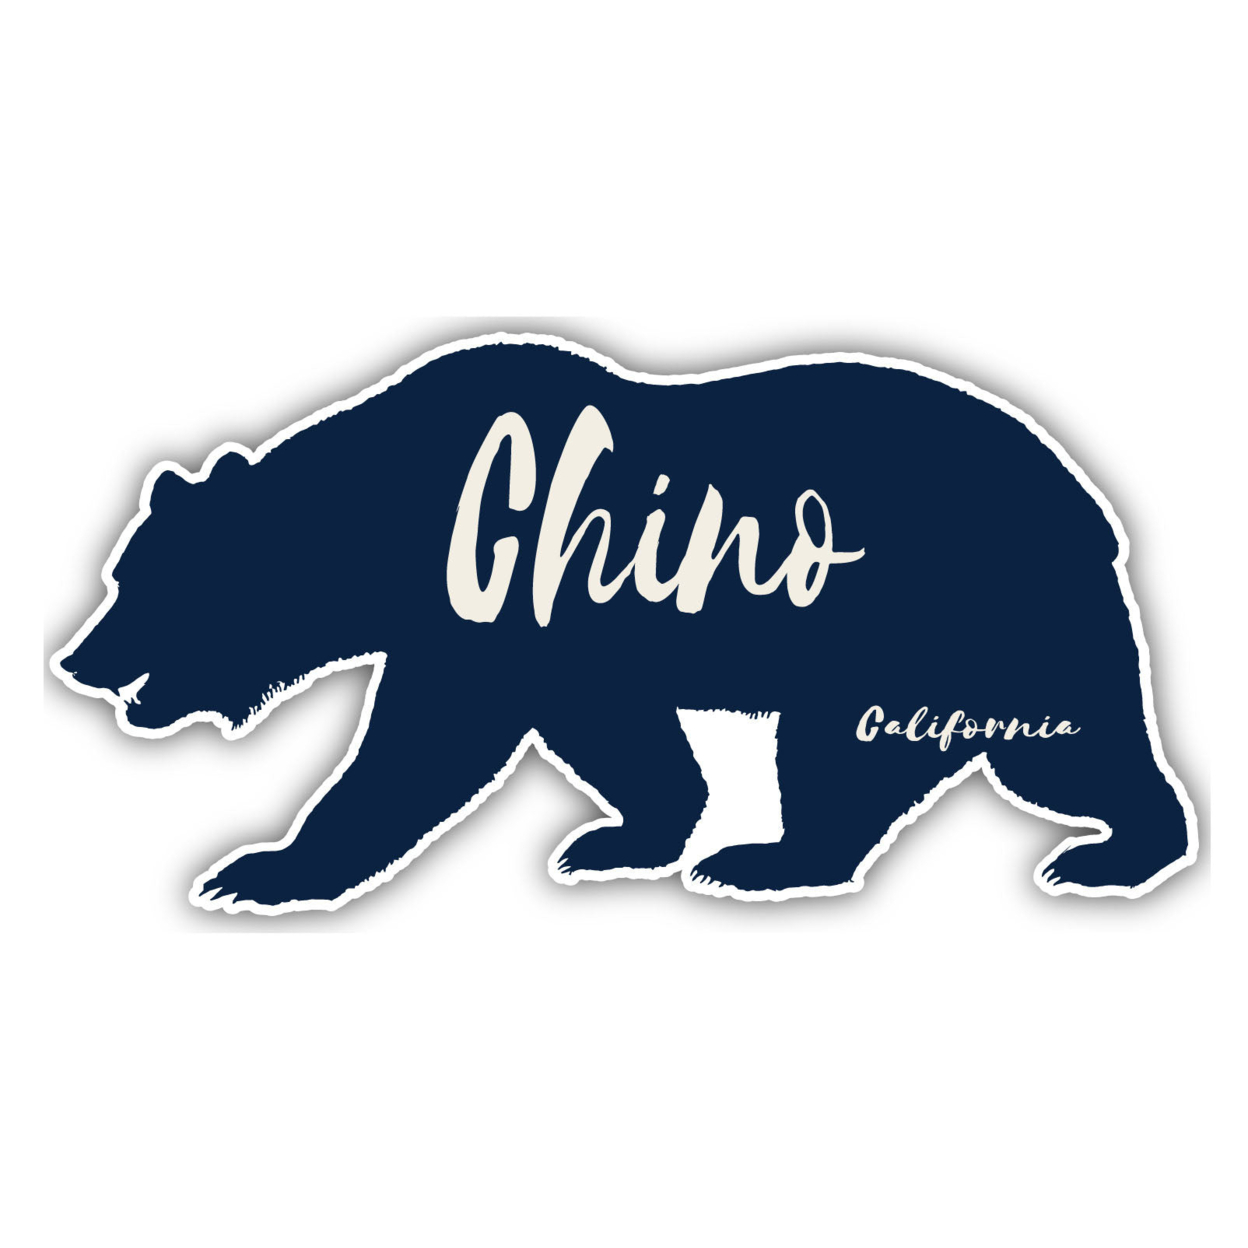 Chino California Souvenir Decorative Stickers (Choose Theme And Size) - Single Unit, 6-Inch, Bear